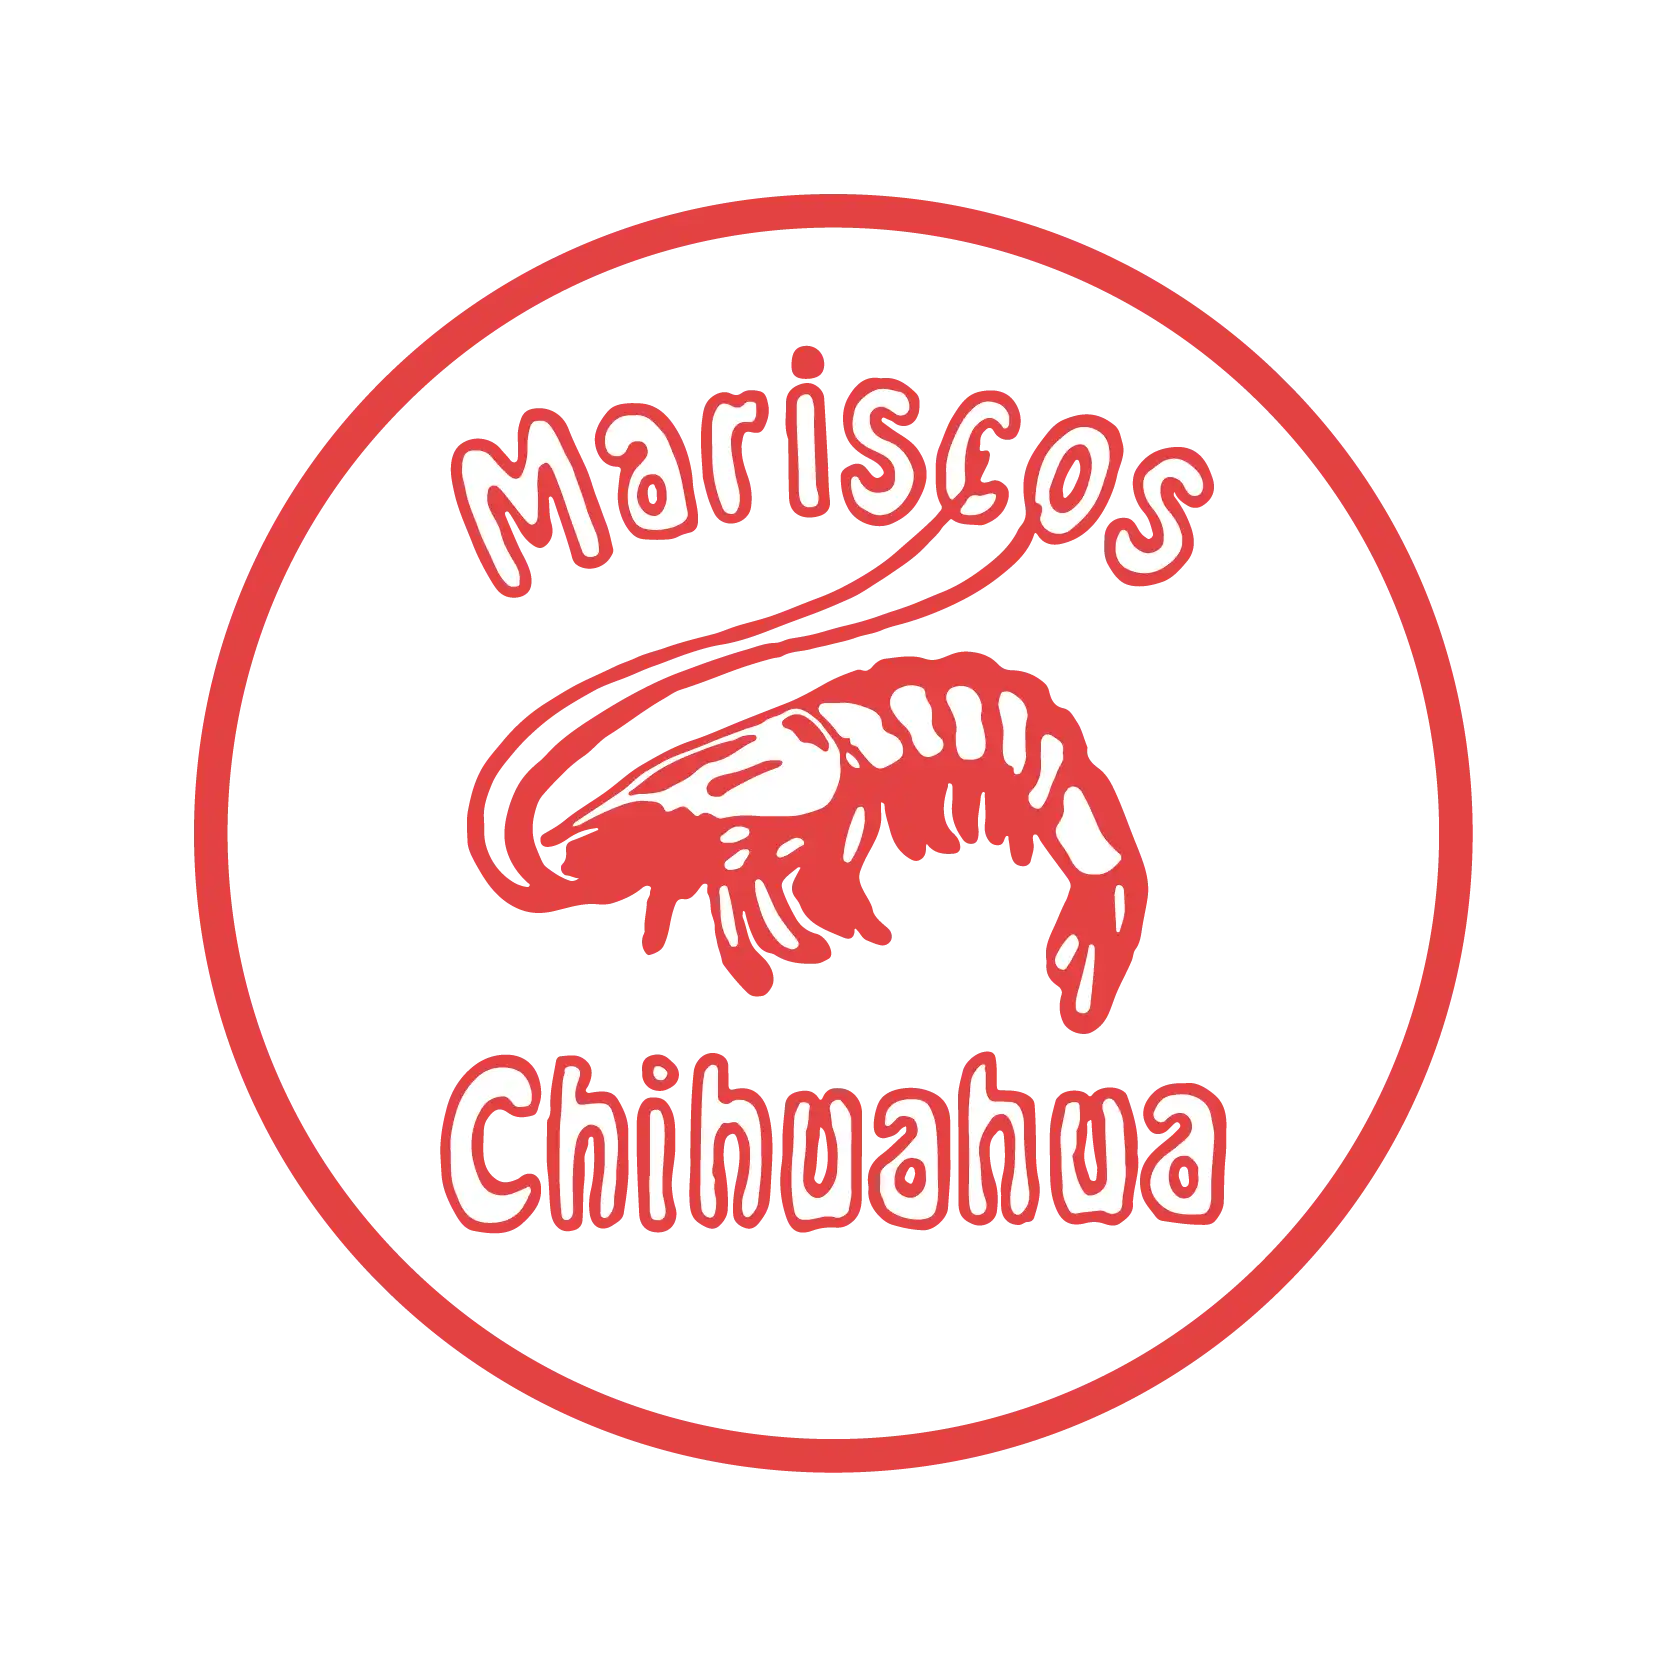 mariscos chihuahua logo